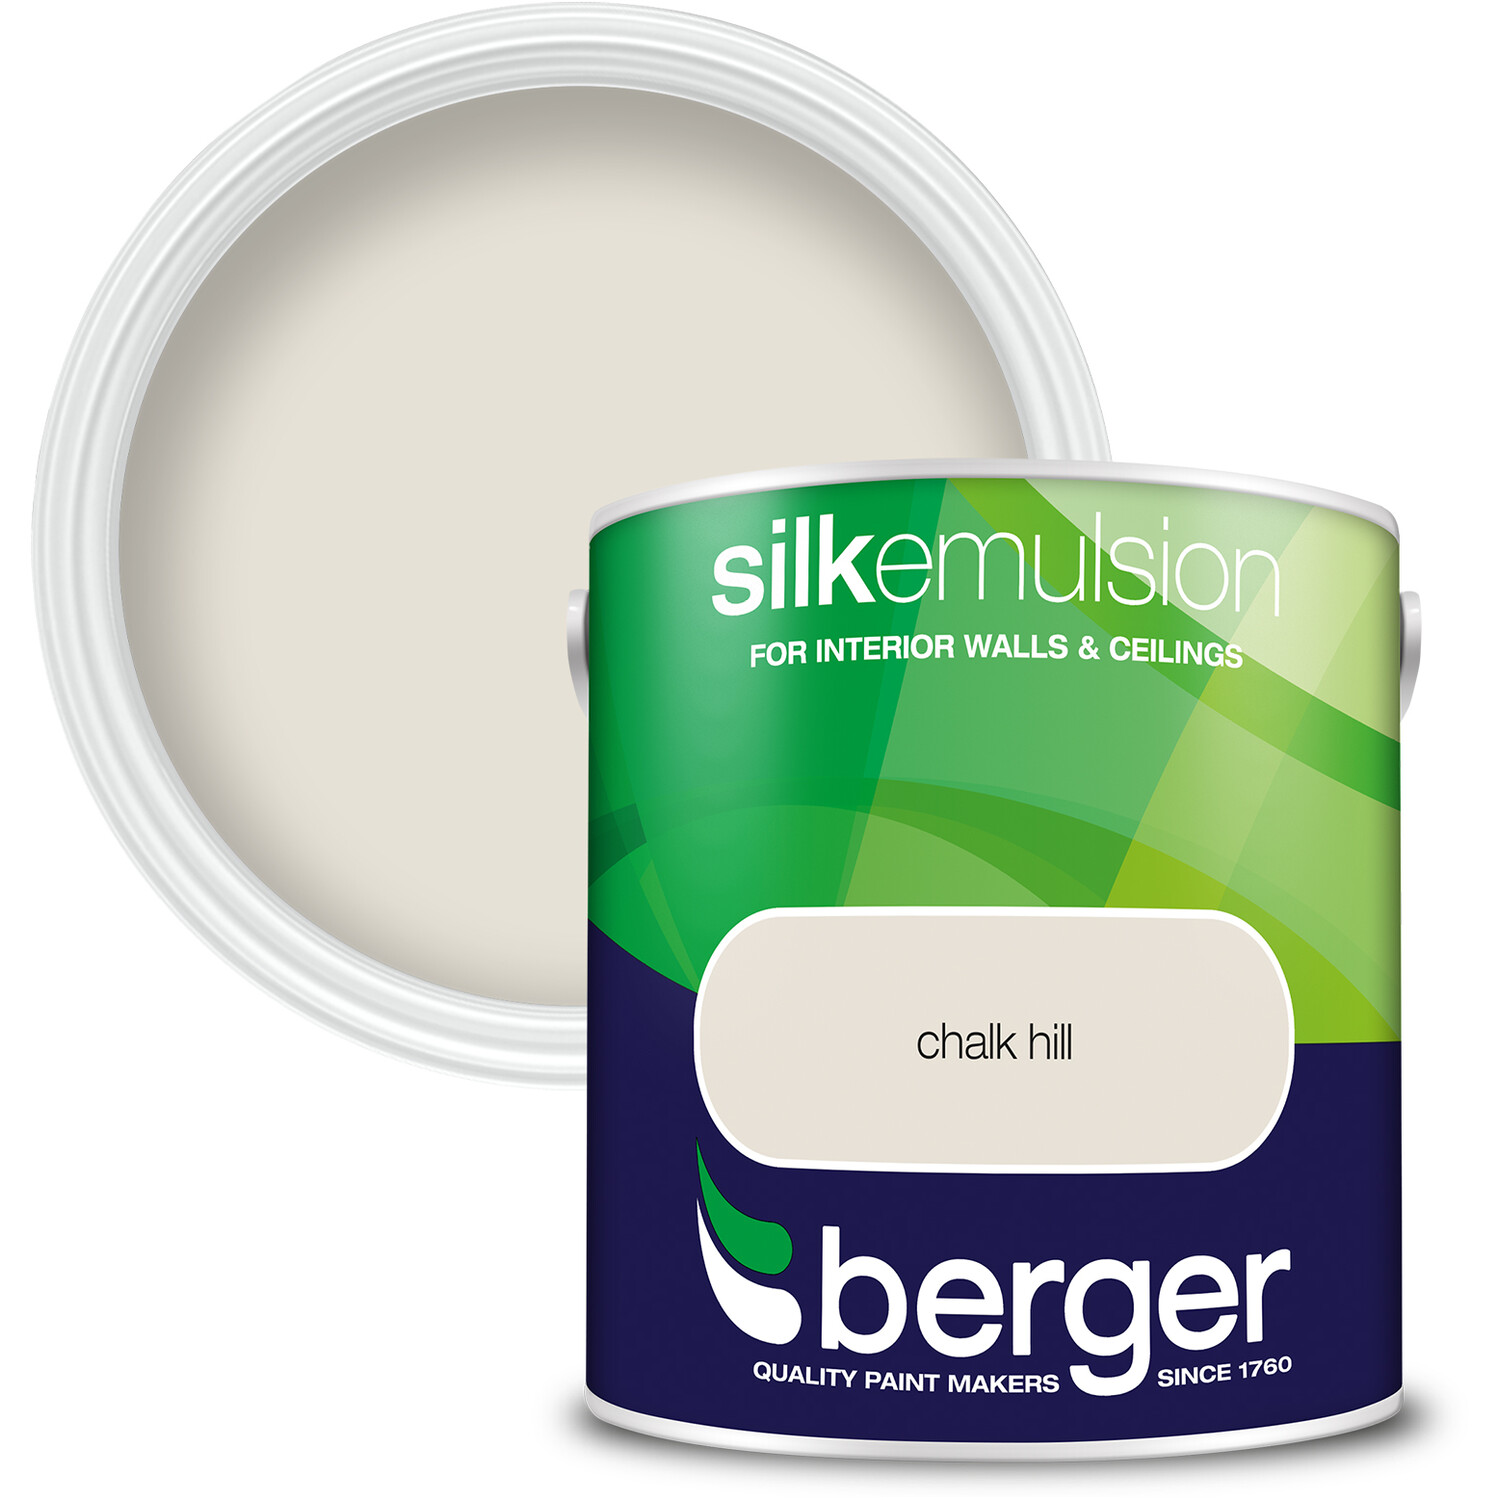 Berger Walls & Ceilings Chalk Hill Silk Emulsion Paint 2.5L Image 1